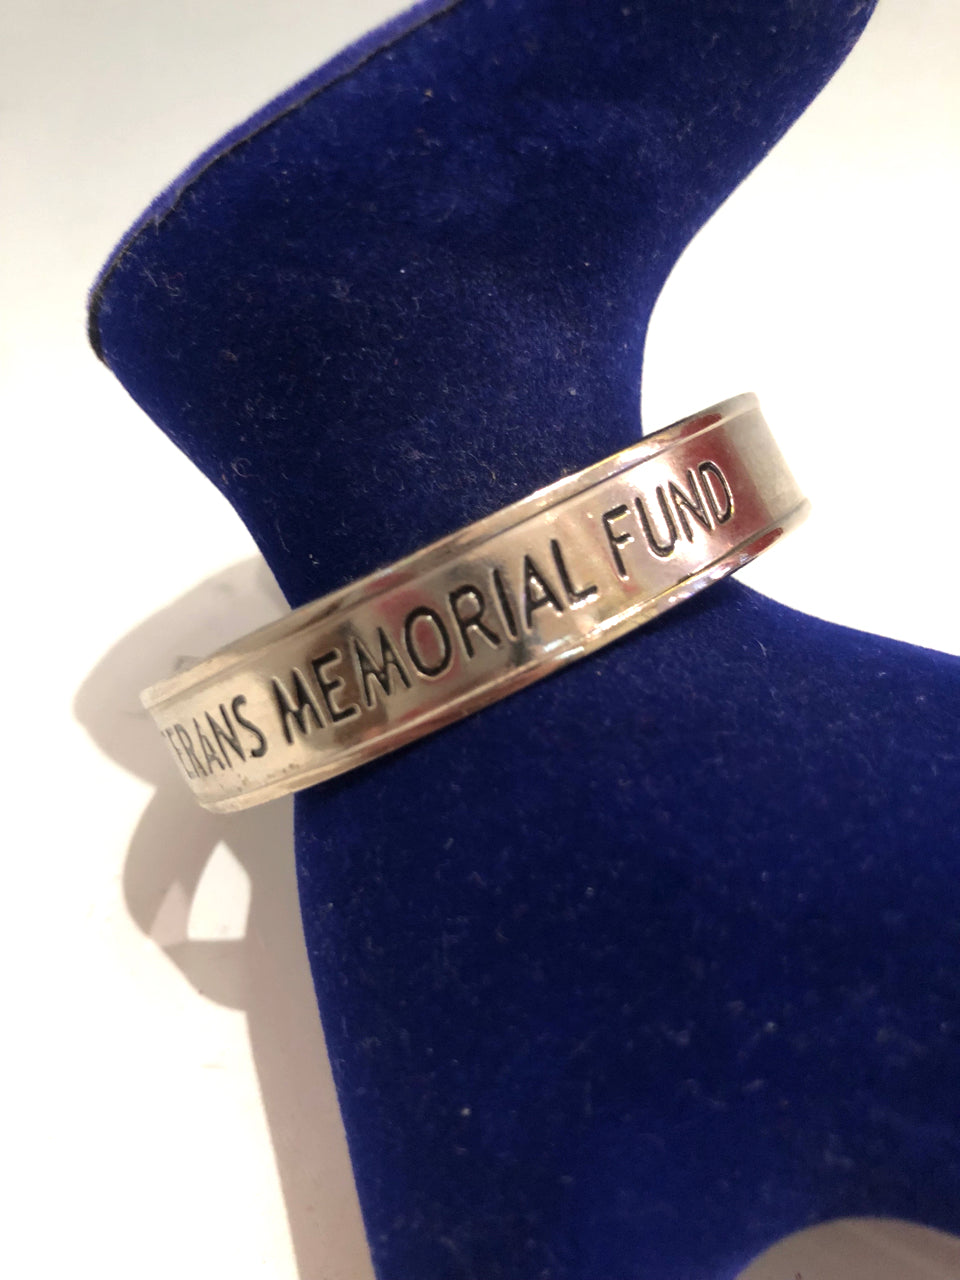 Vietnam Veterans Memorial Fund Cuff